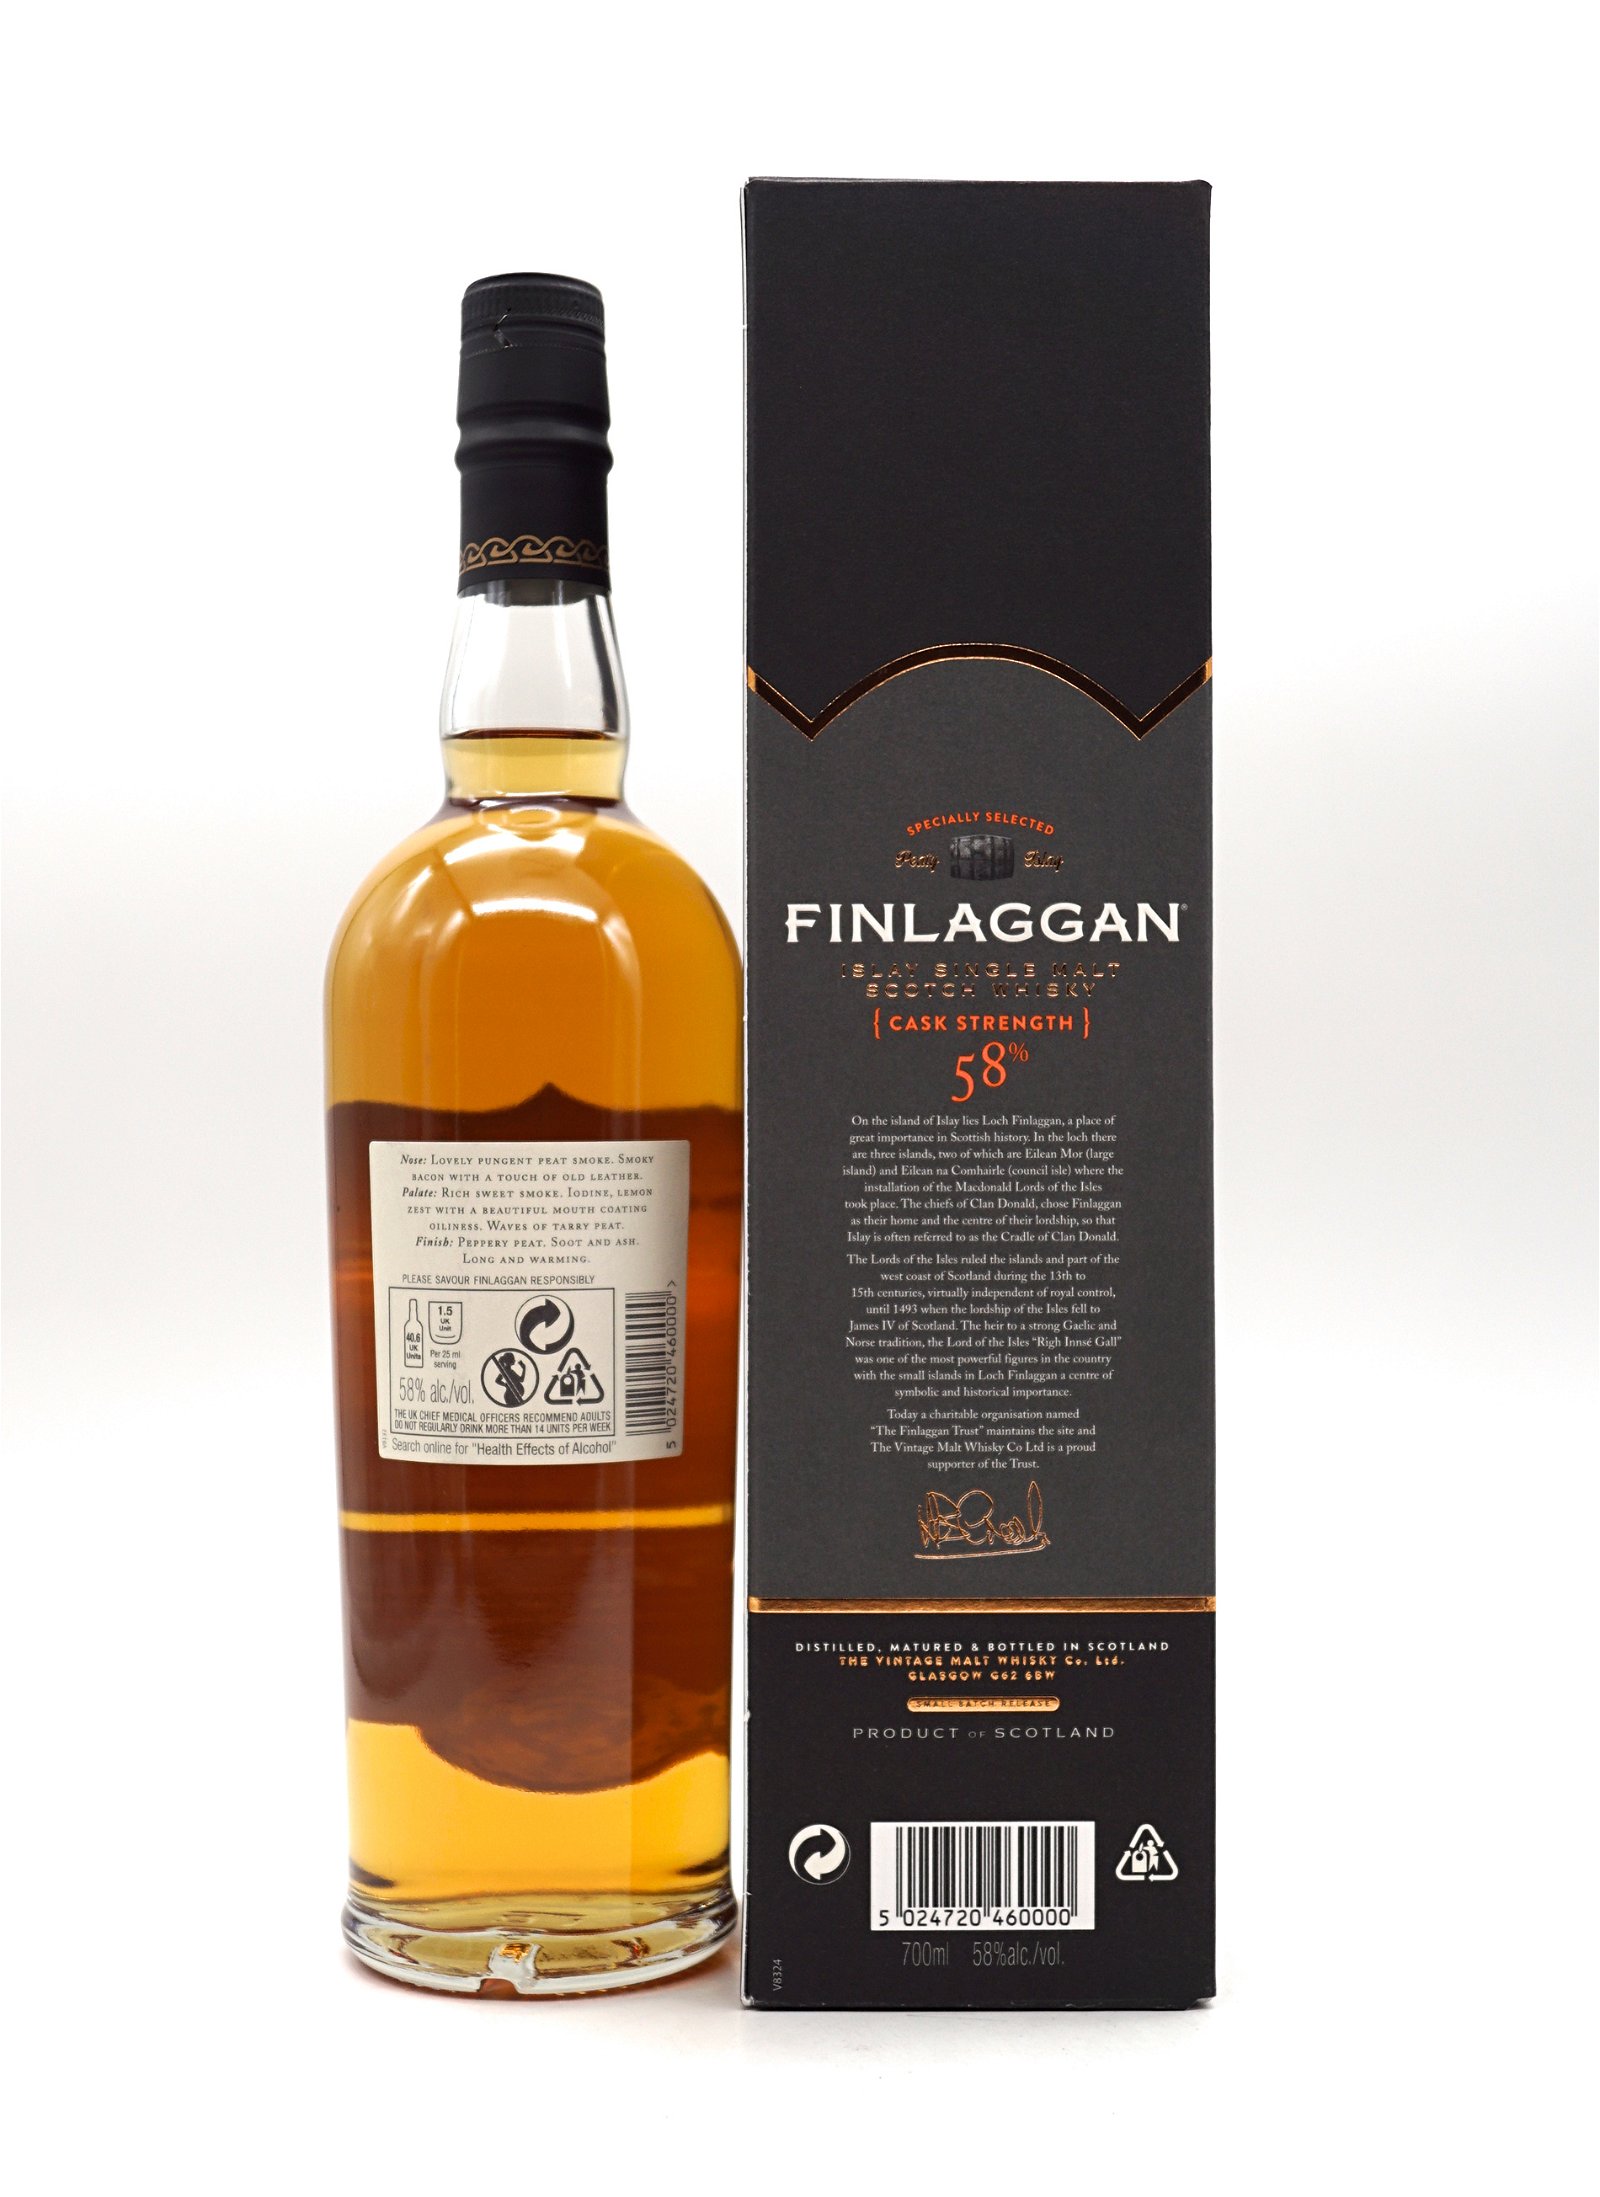 Finlaggan Cask Strength 58 % Islay Single Malt Scotch Whisky 